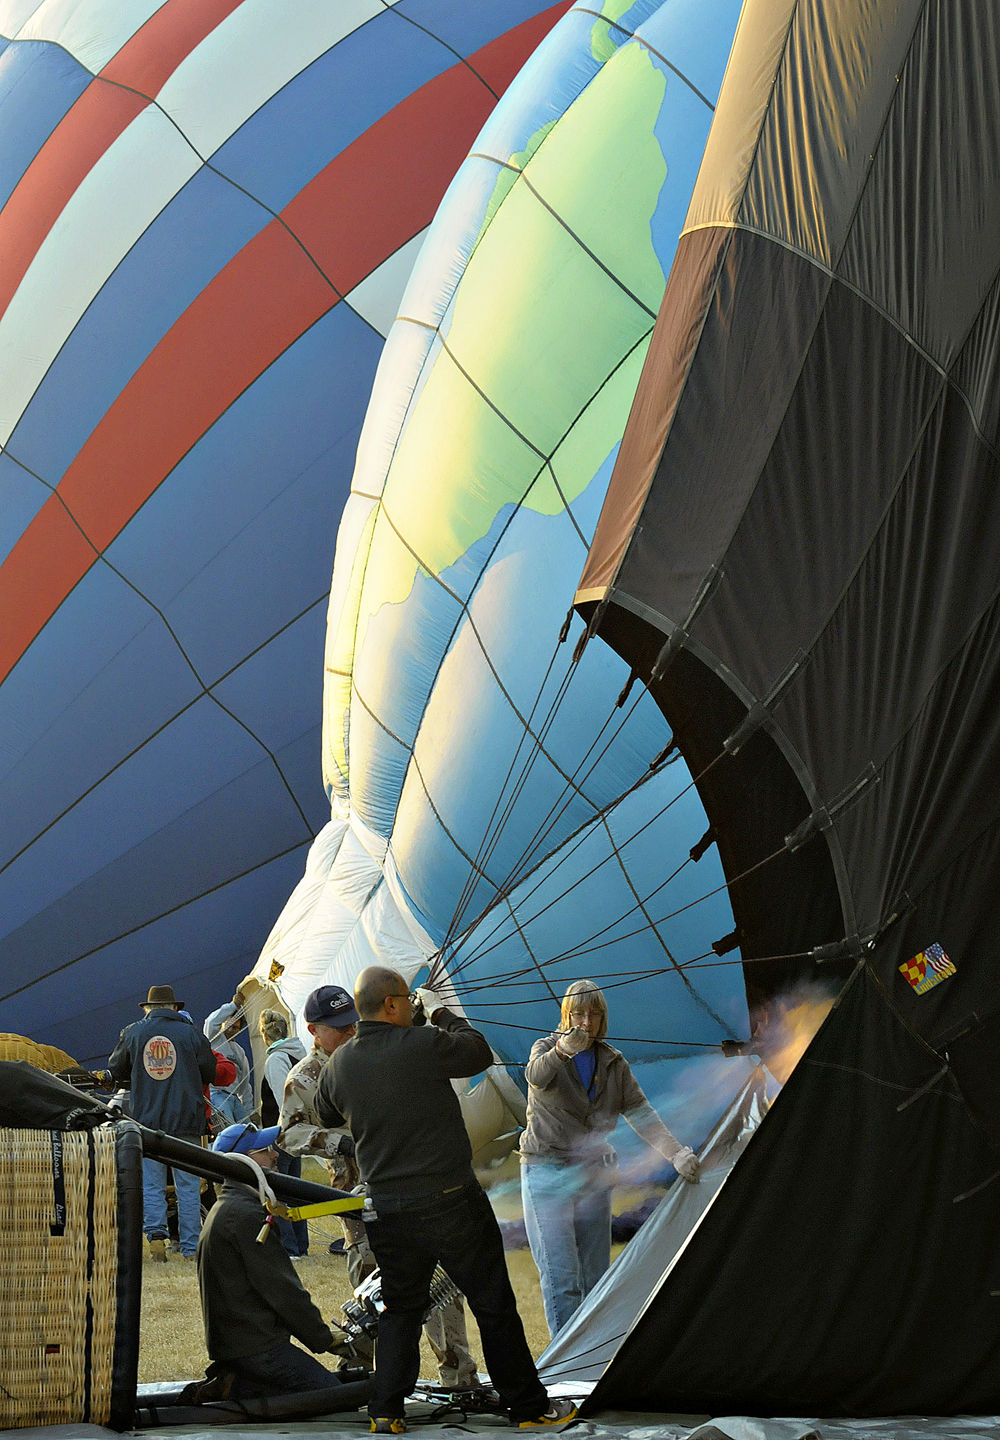 Balloons lift Albany art, air festival Local